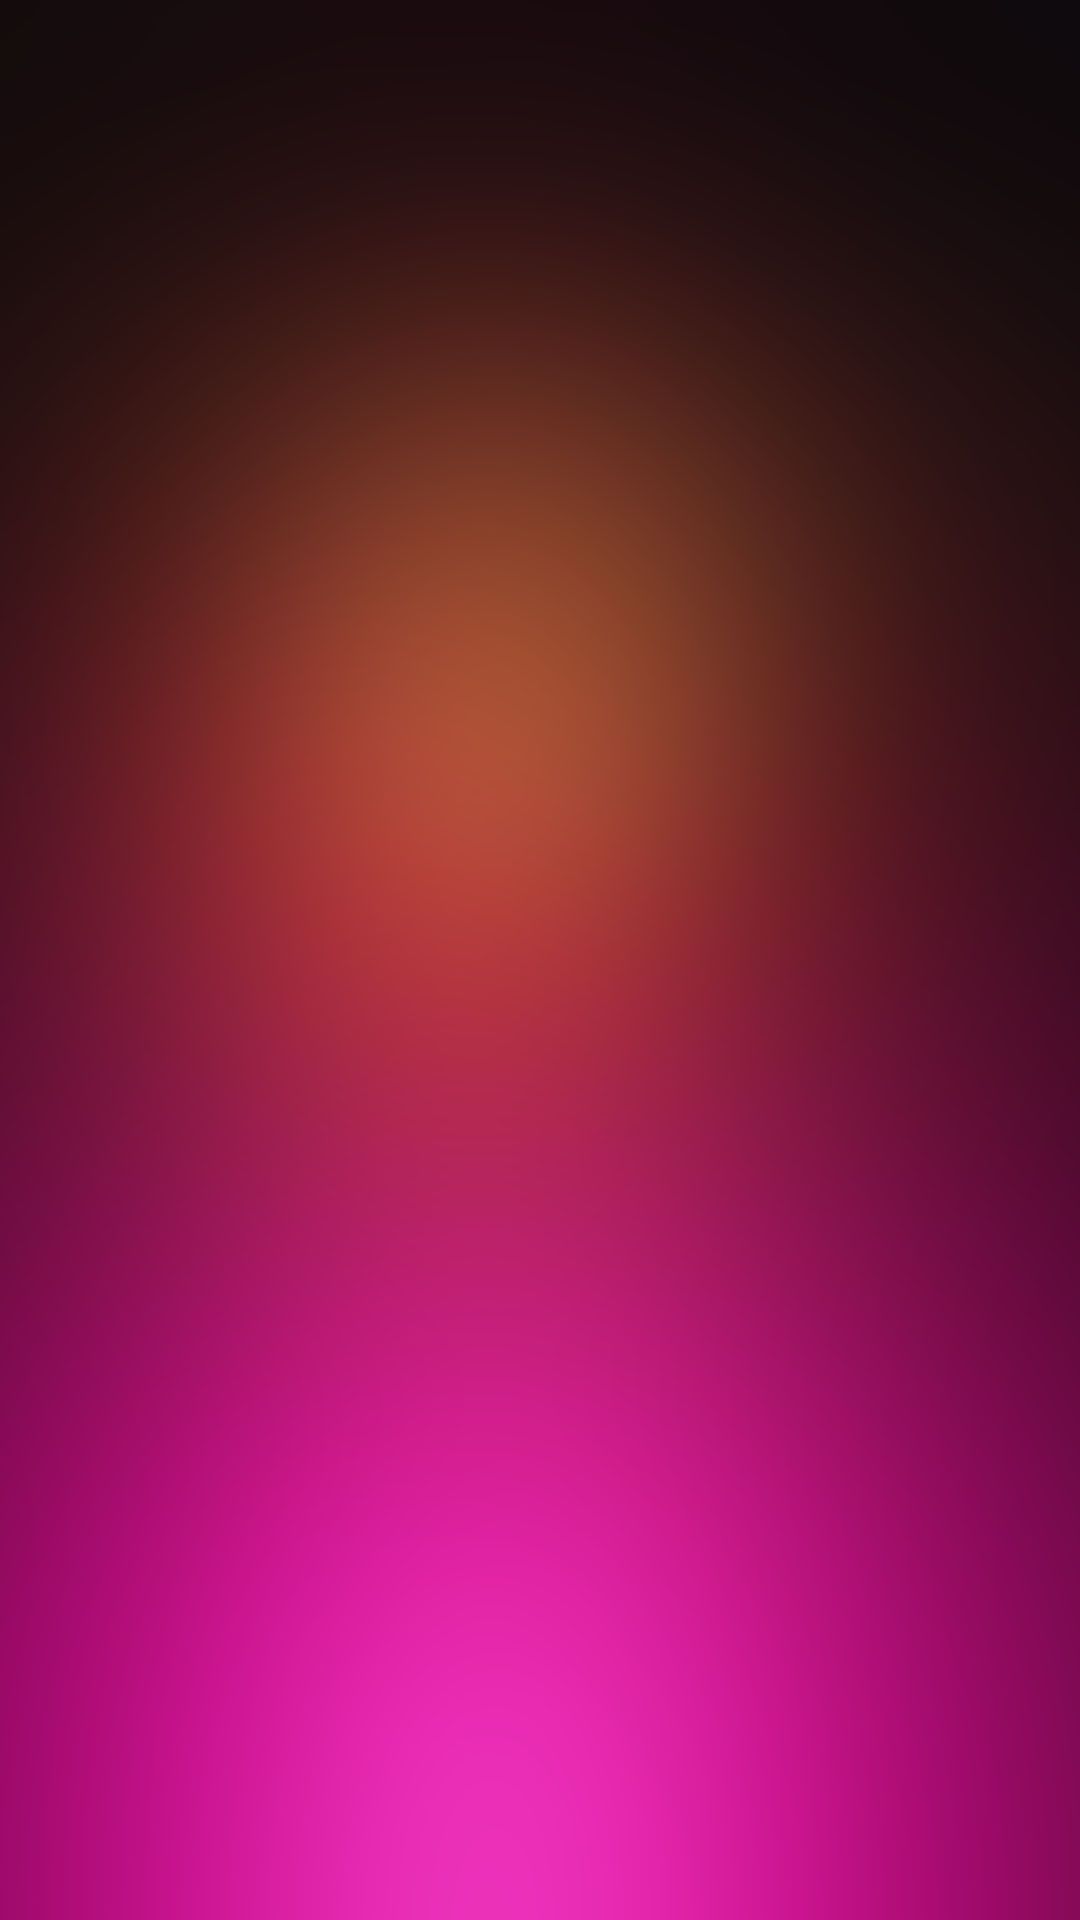 Intense Pink Orange Gradient Android Wallpaper free download